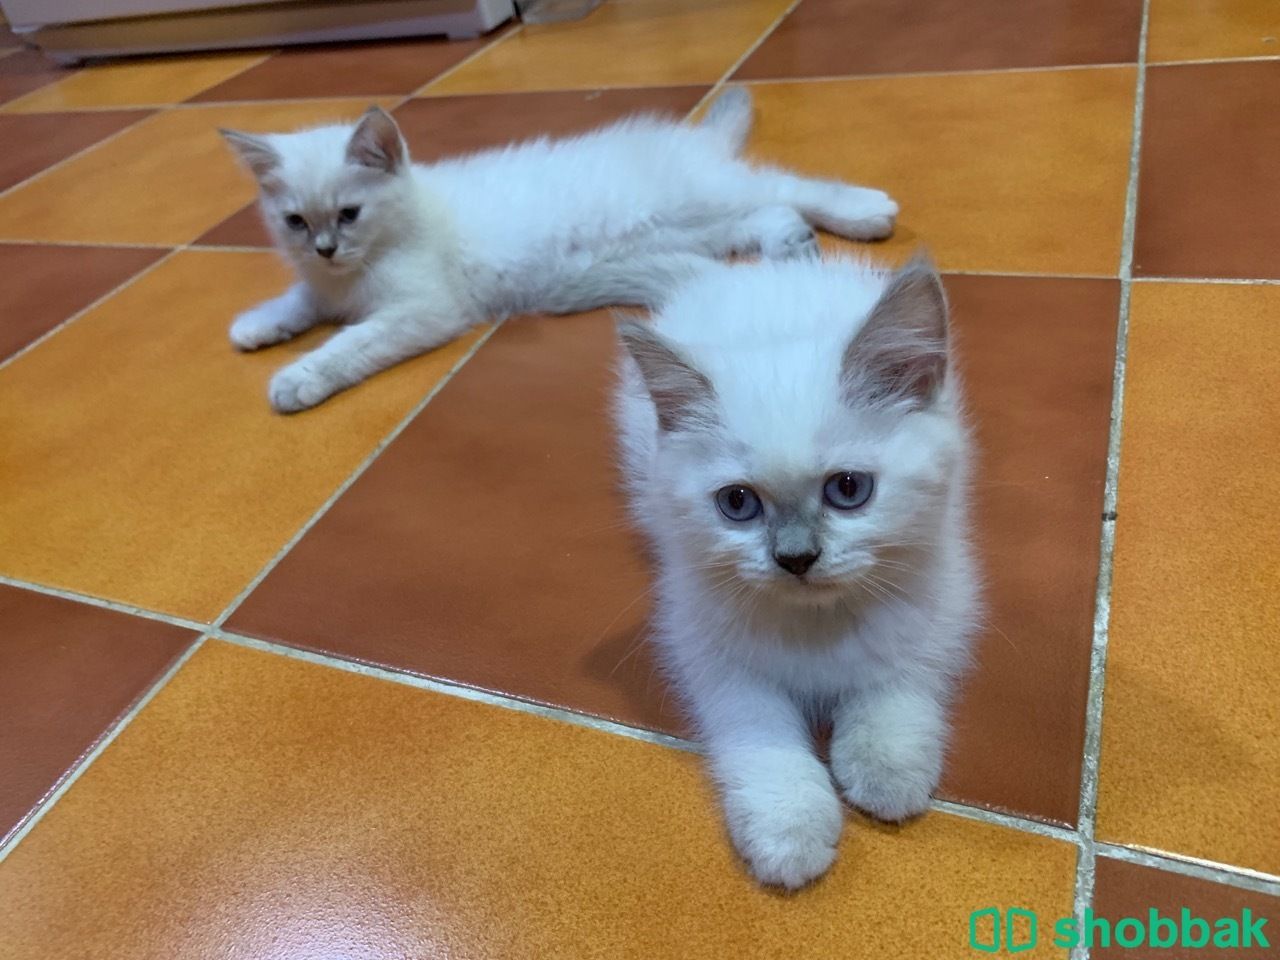 Cute kittens for FREE Shobbak Saudi Arabia